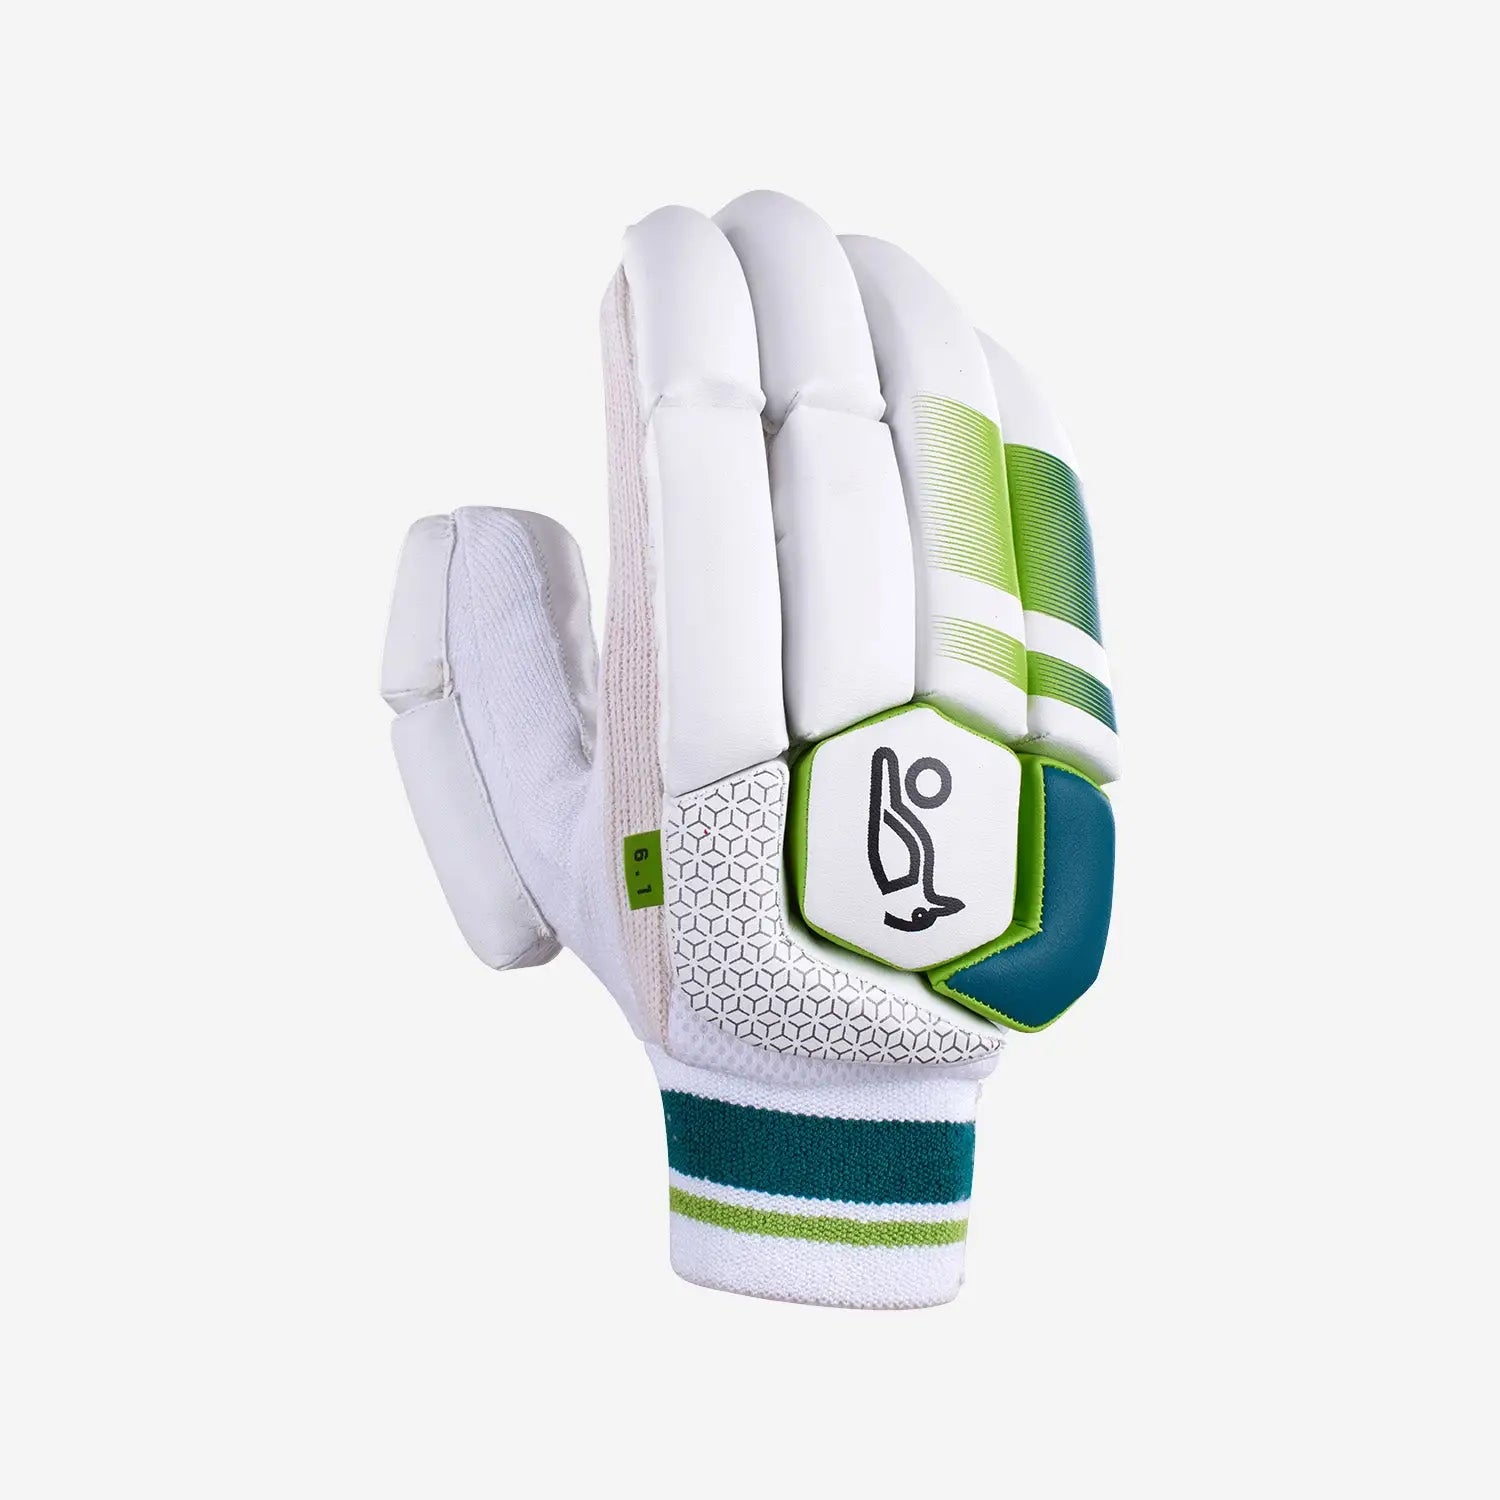 Kookaburra KAHUNA 6.1 Cricket Batting Gloves Comfort and Protection - GLOVE - BATTING